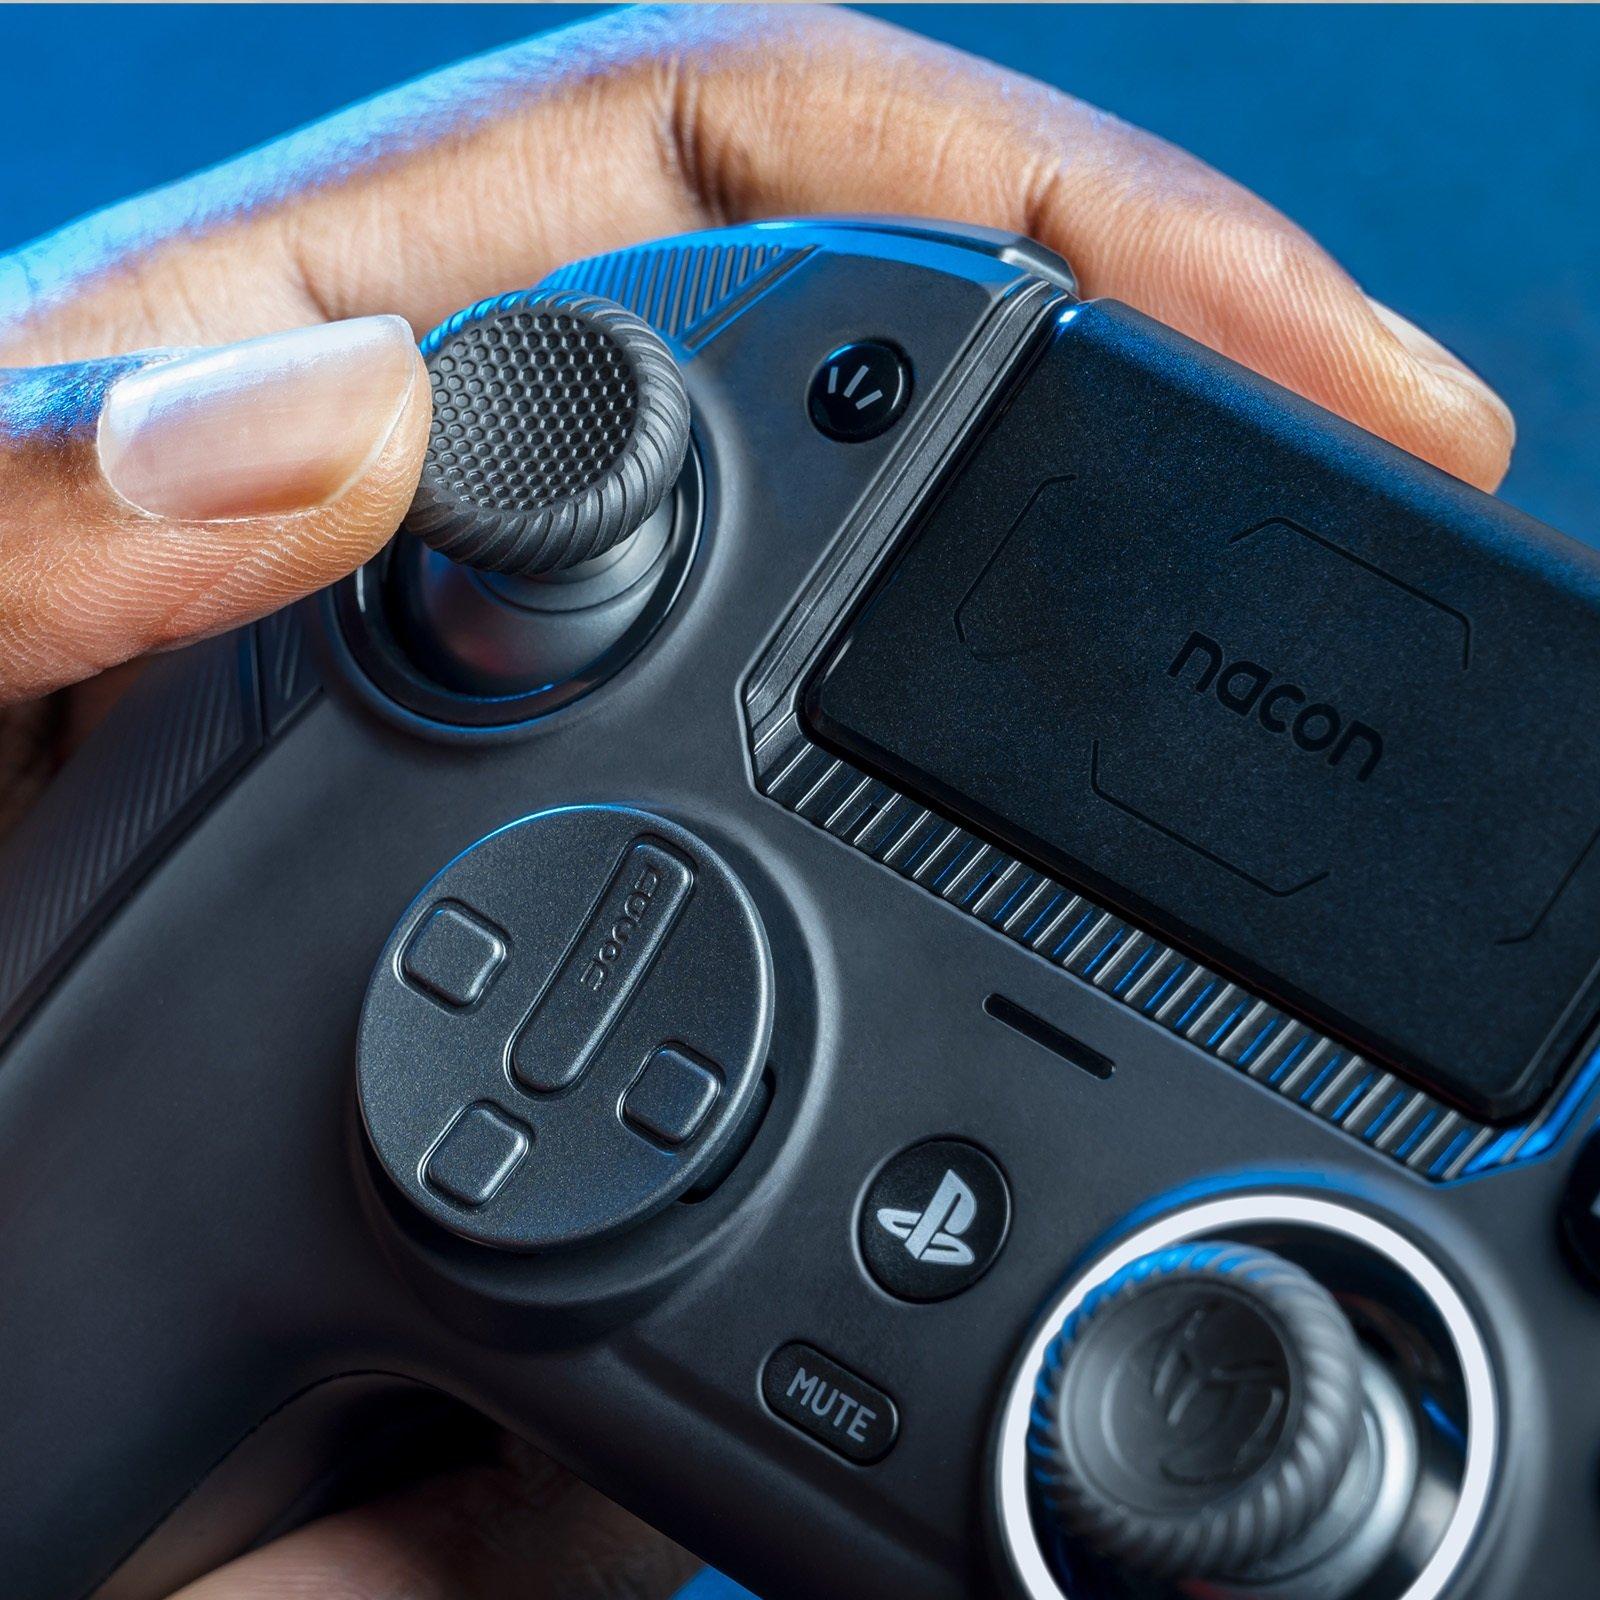 Nacon Revolution Pro Controller 3 for PlayStation 4 for Windows, PlayStation  4, Playstation 4 Pro